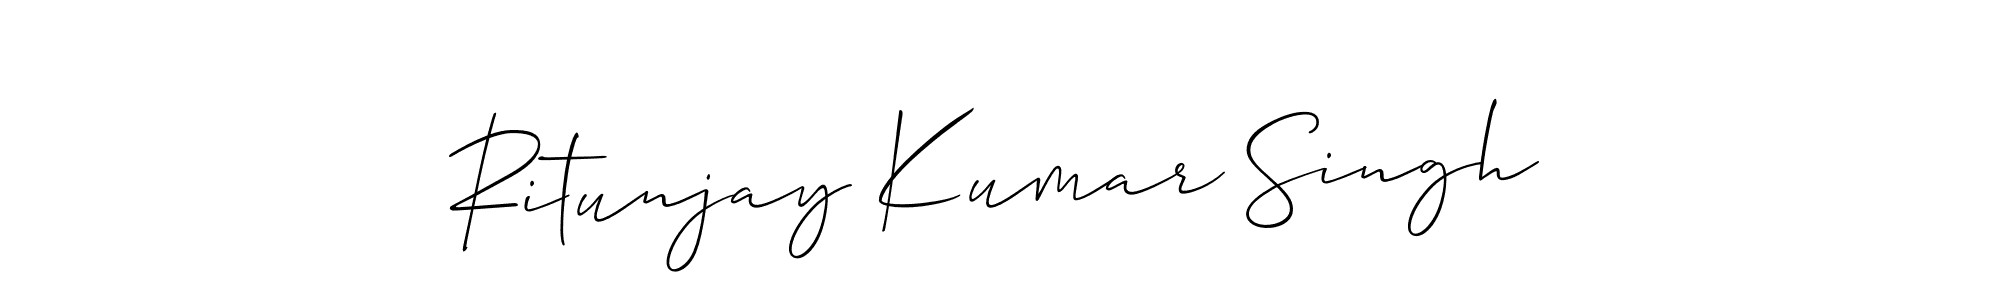 How to Draw Ritunjay Kumar Singh signature style? Allison_Script is a latest design signature styles for name Ritunjay Kumar Singh. Ritunjay Kumar Singh signature style 2 images and pictures png